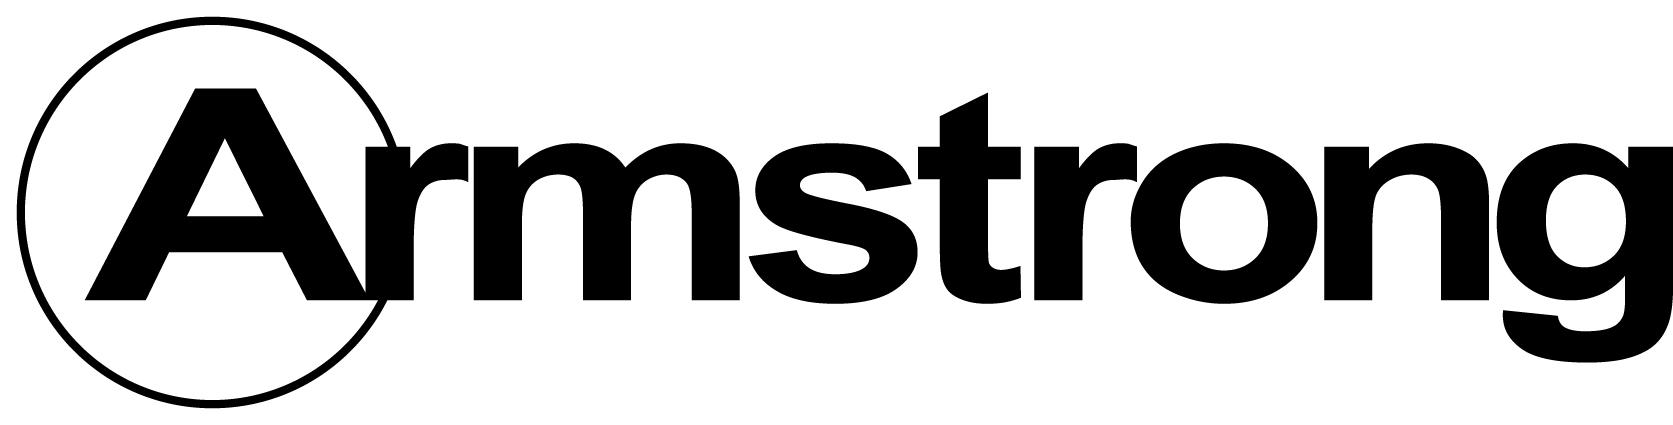 Armstrong Logo - Armstrong World Industries logo | Pickering Associates